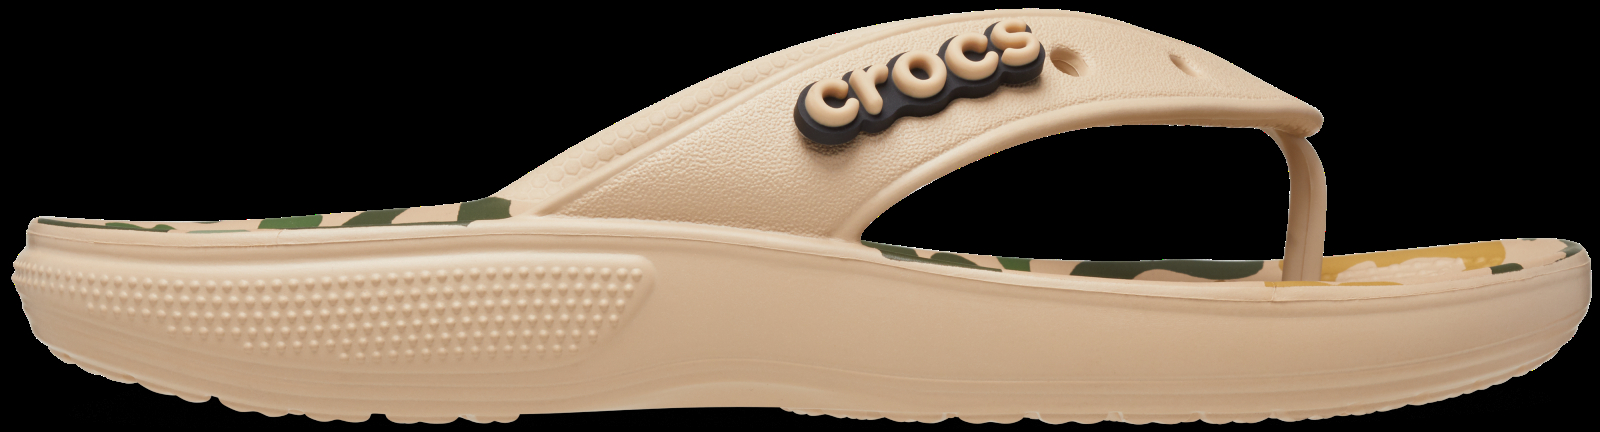 Kvinnors Crocs CLASSIC Camo beige träskor 36-37